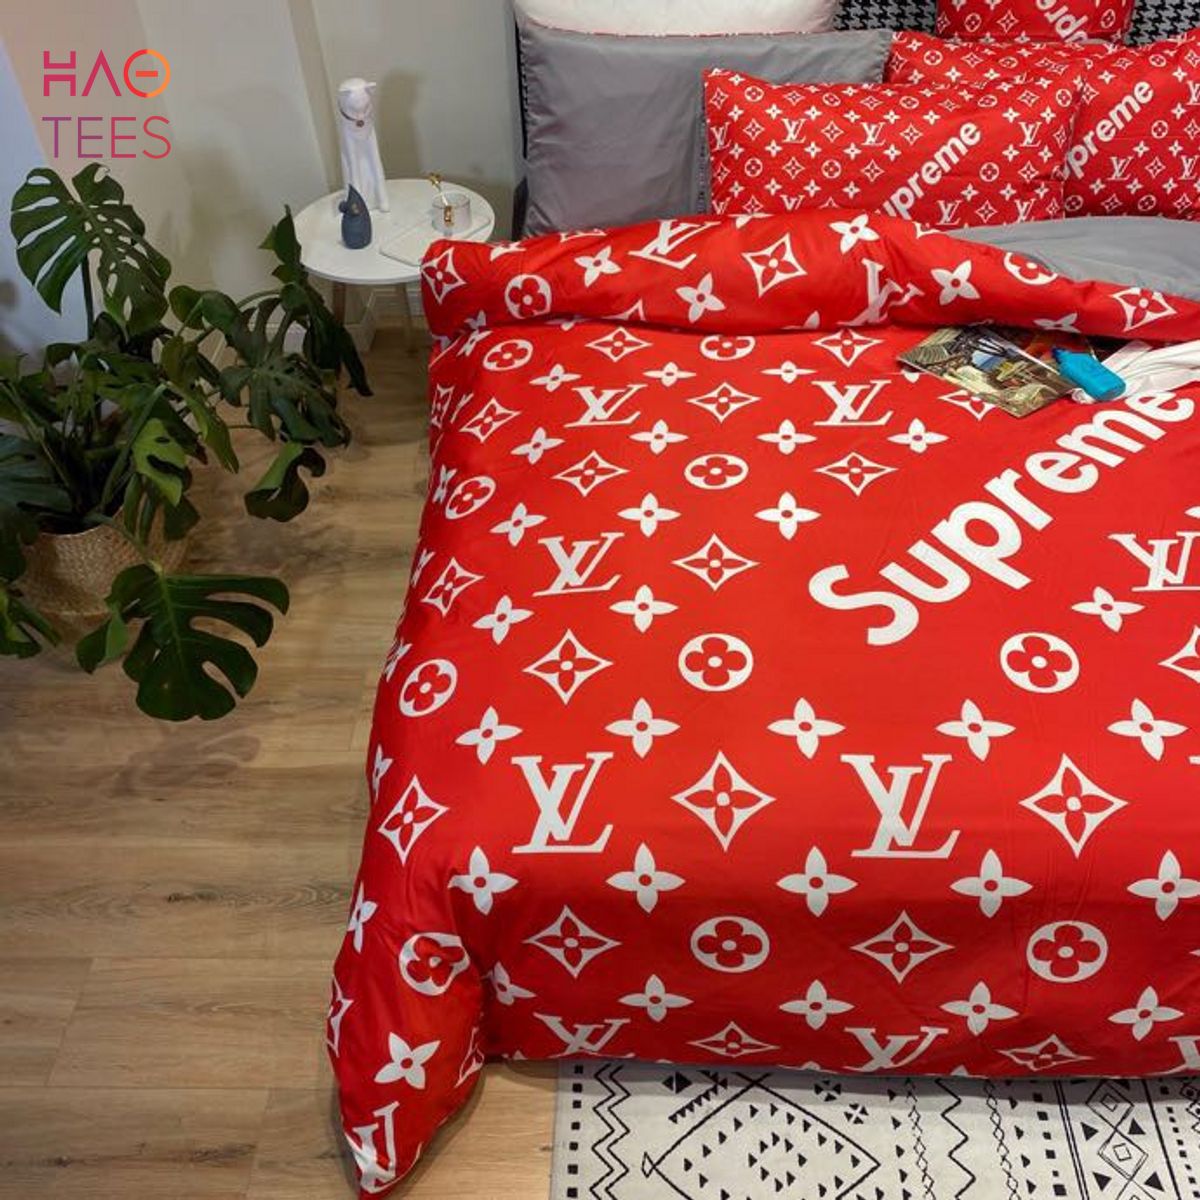 Louis Vuitton x Supreme Red Monogram Comforter Bedding Set - REVER